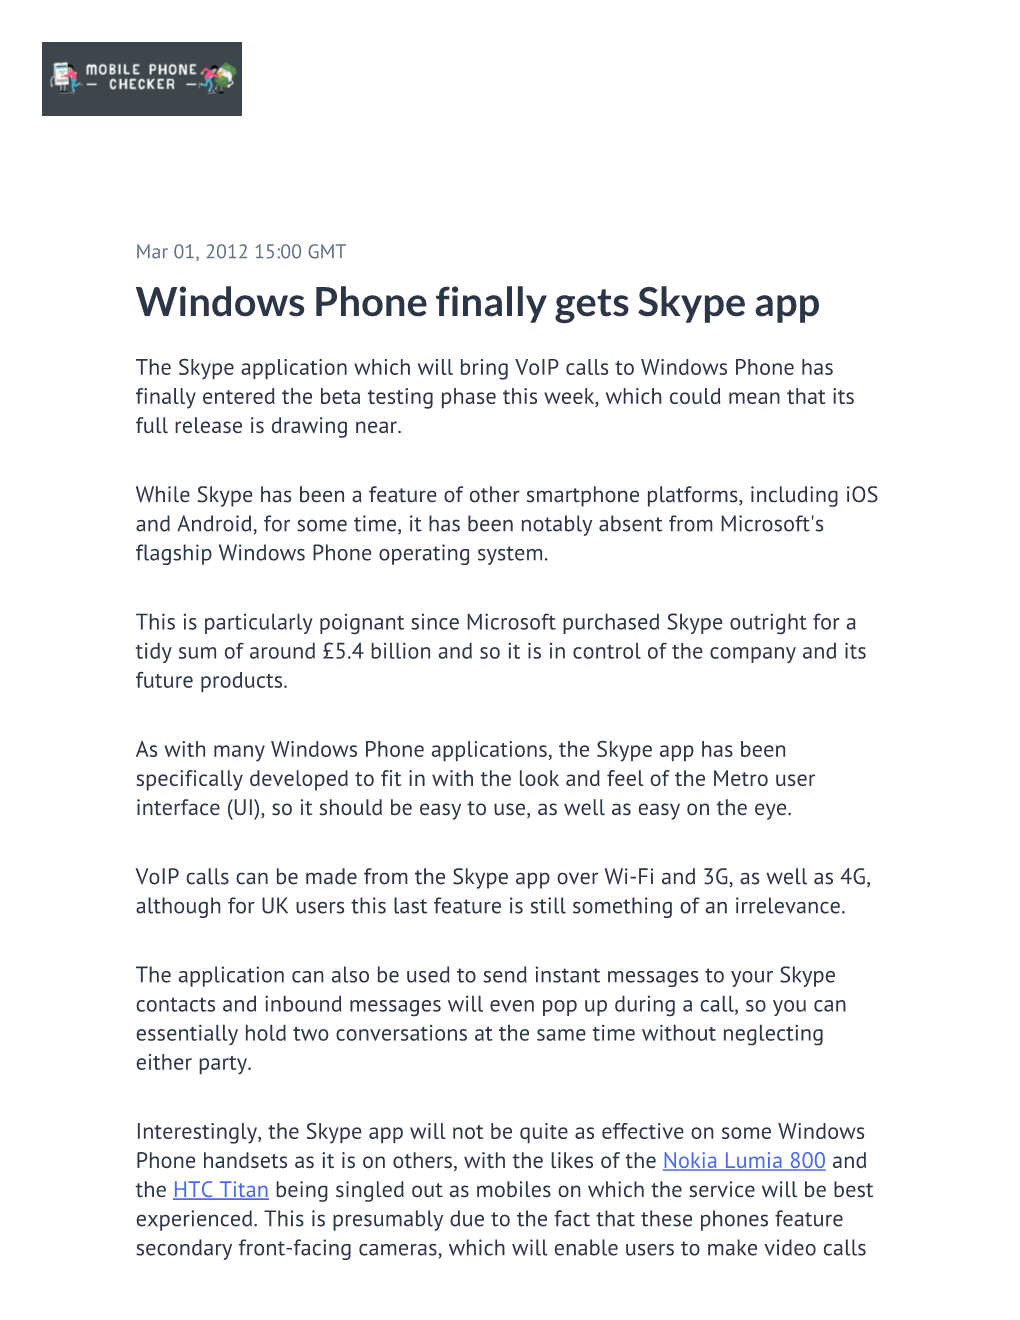 Windows Phone Finally Gets Skype App